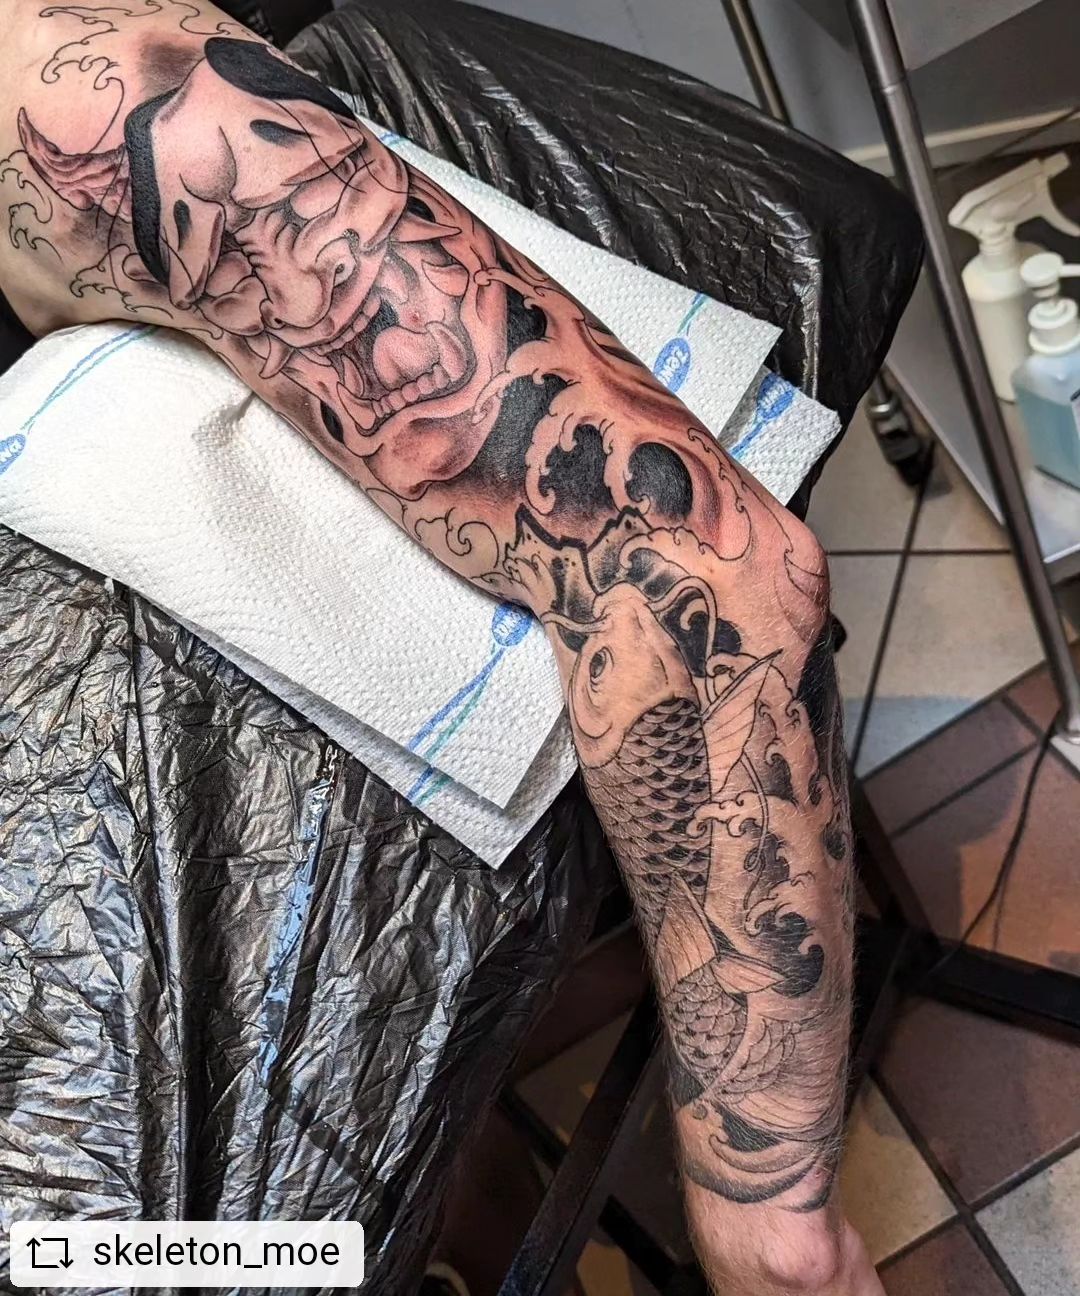 Japanese sleeve @skeleton_moe From today
#tattoo #irezumi #tattoos #ink #tattooa